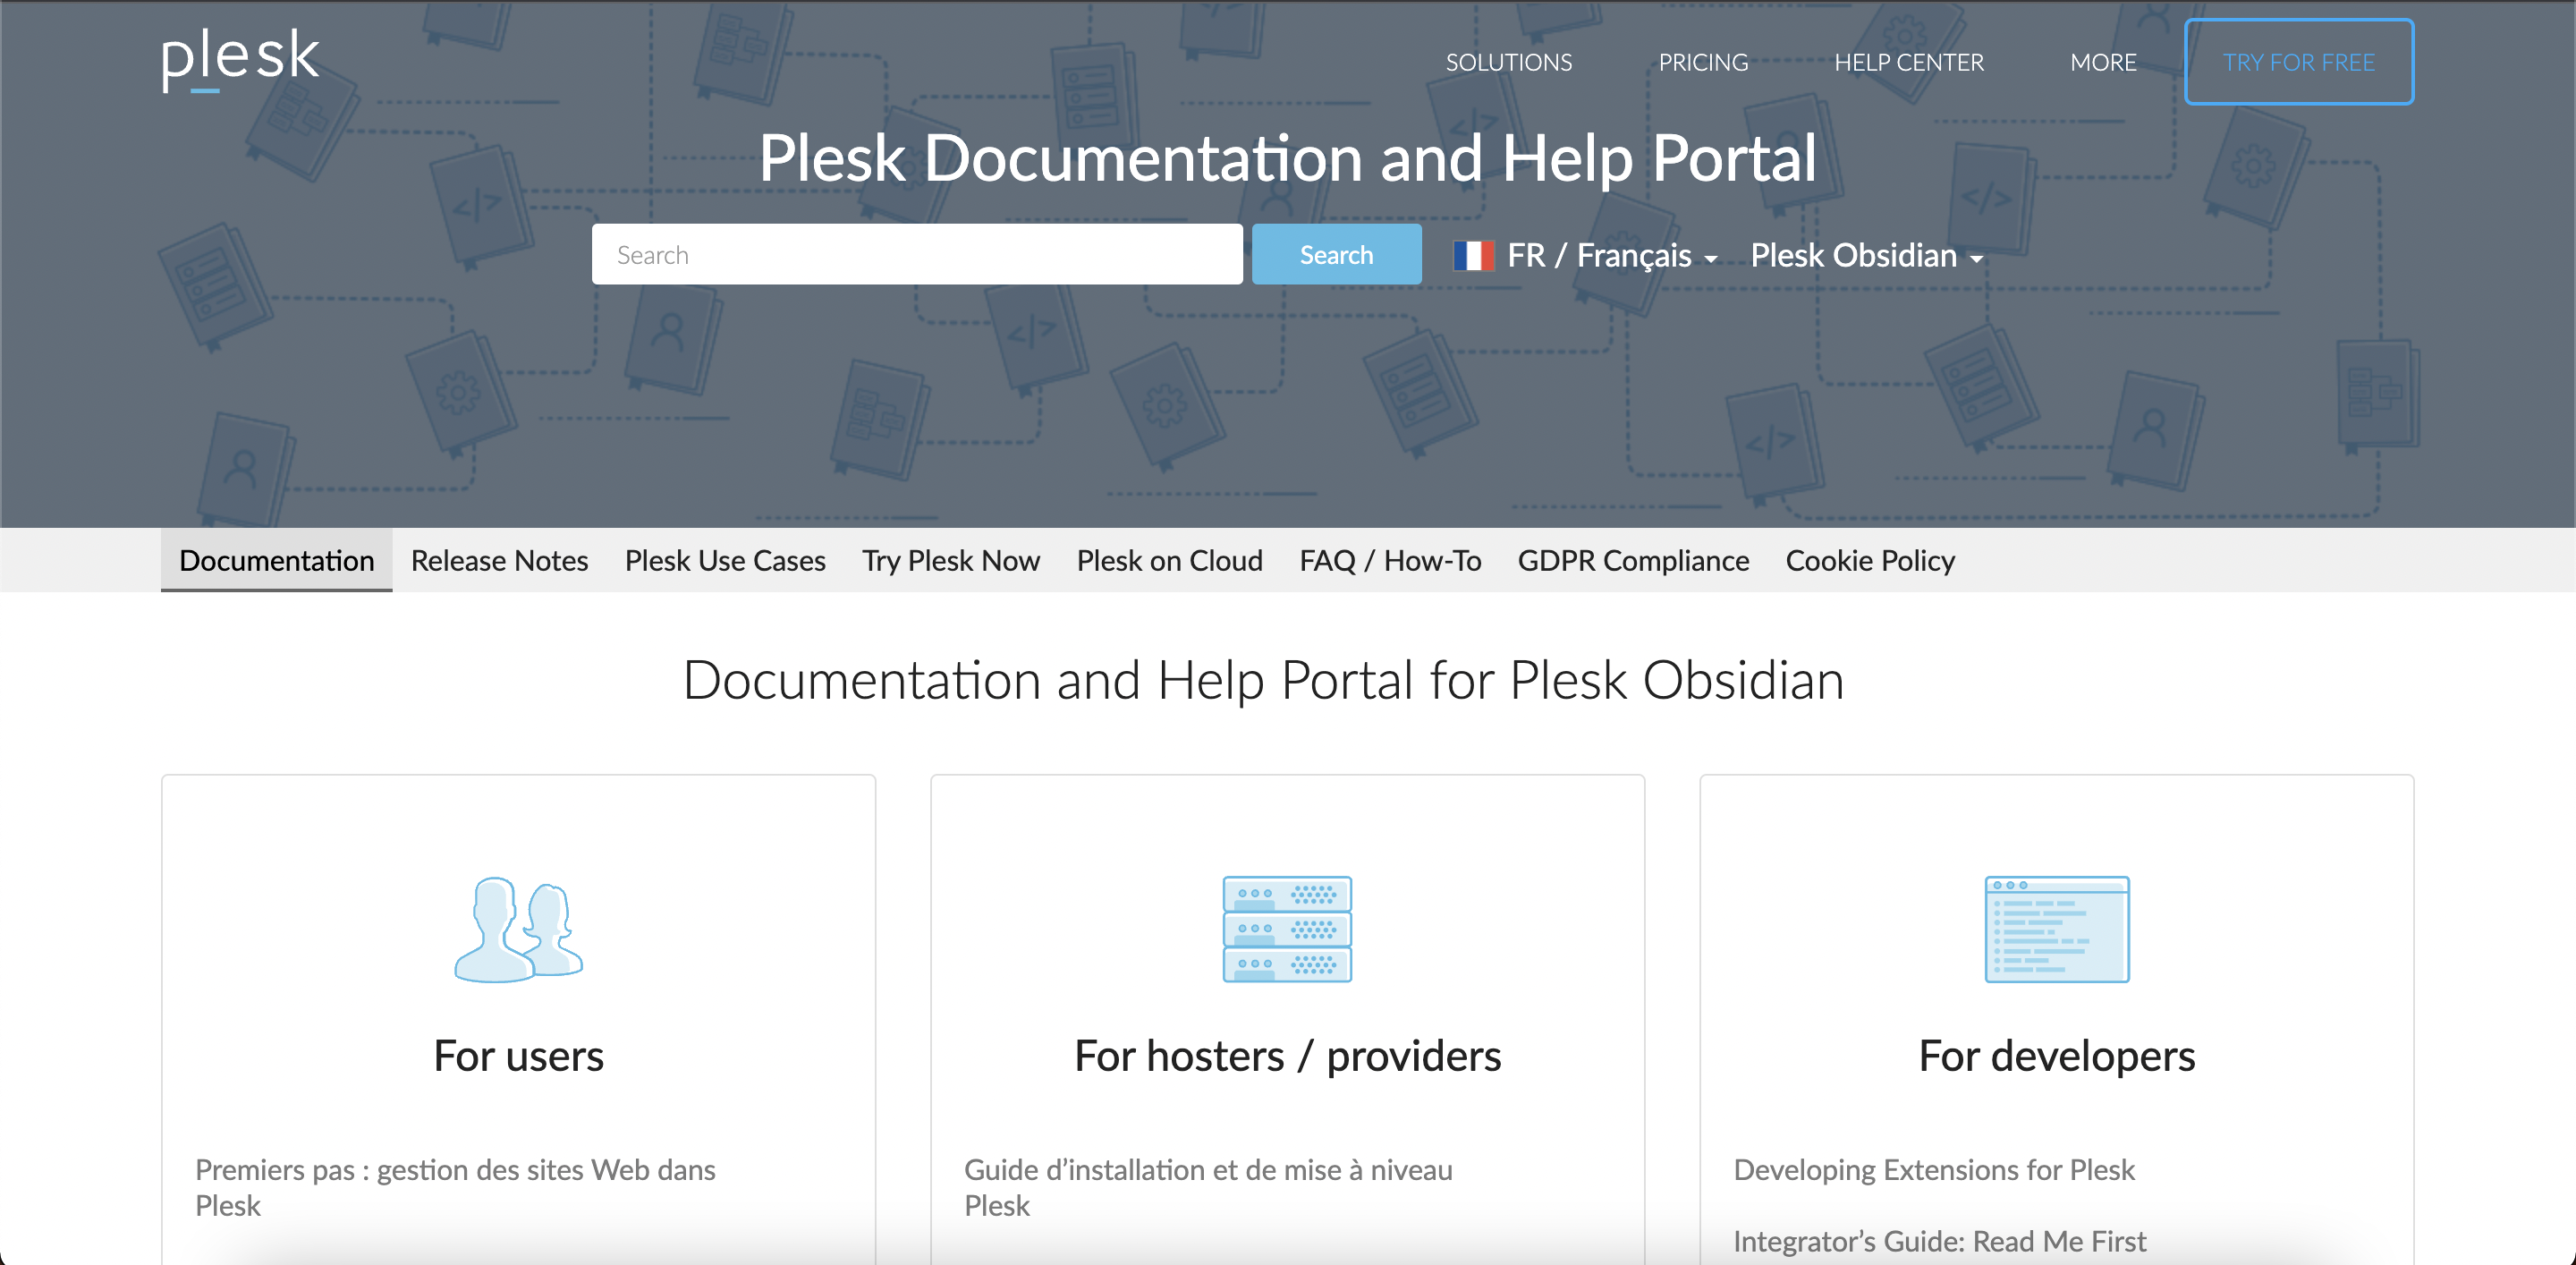 Plesk Documentation and Help Portal